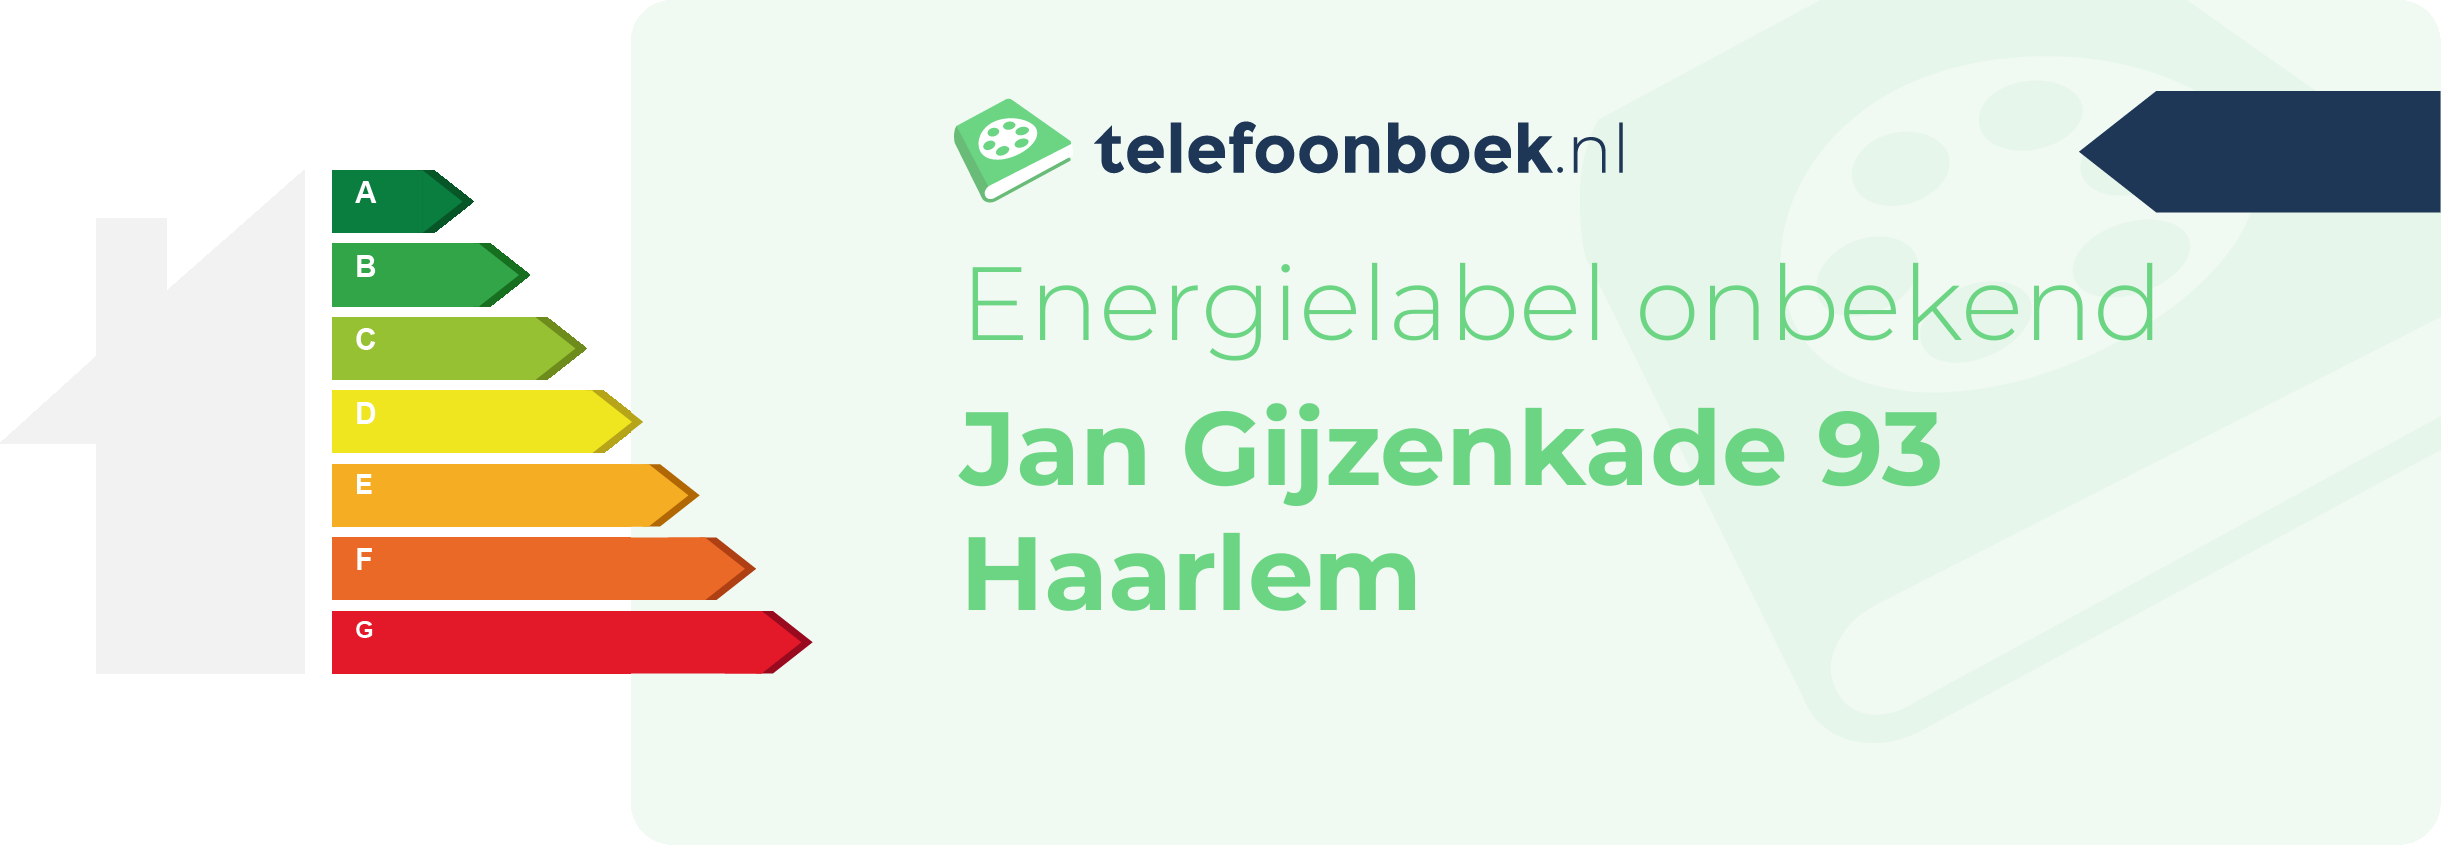 Energielabel Jan Gijzenkade 93 Haarlem